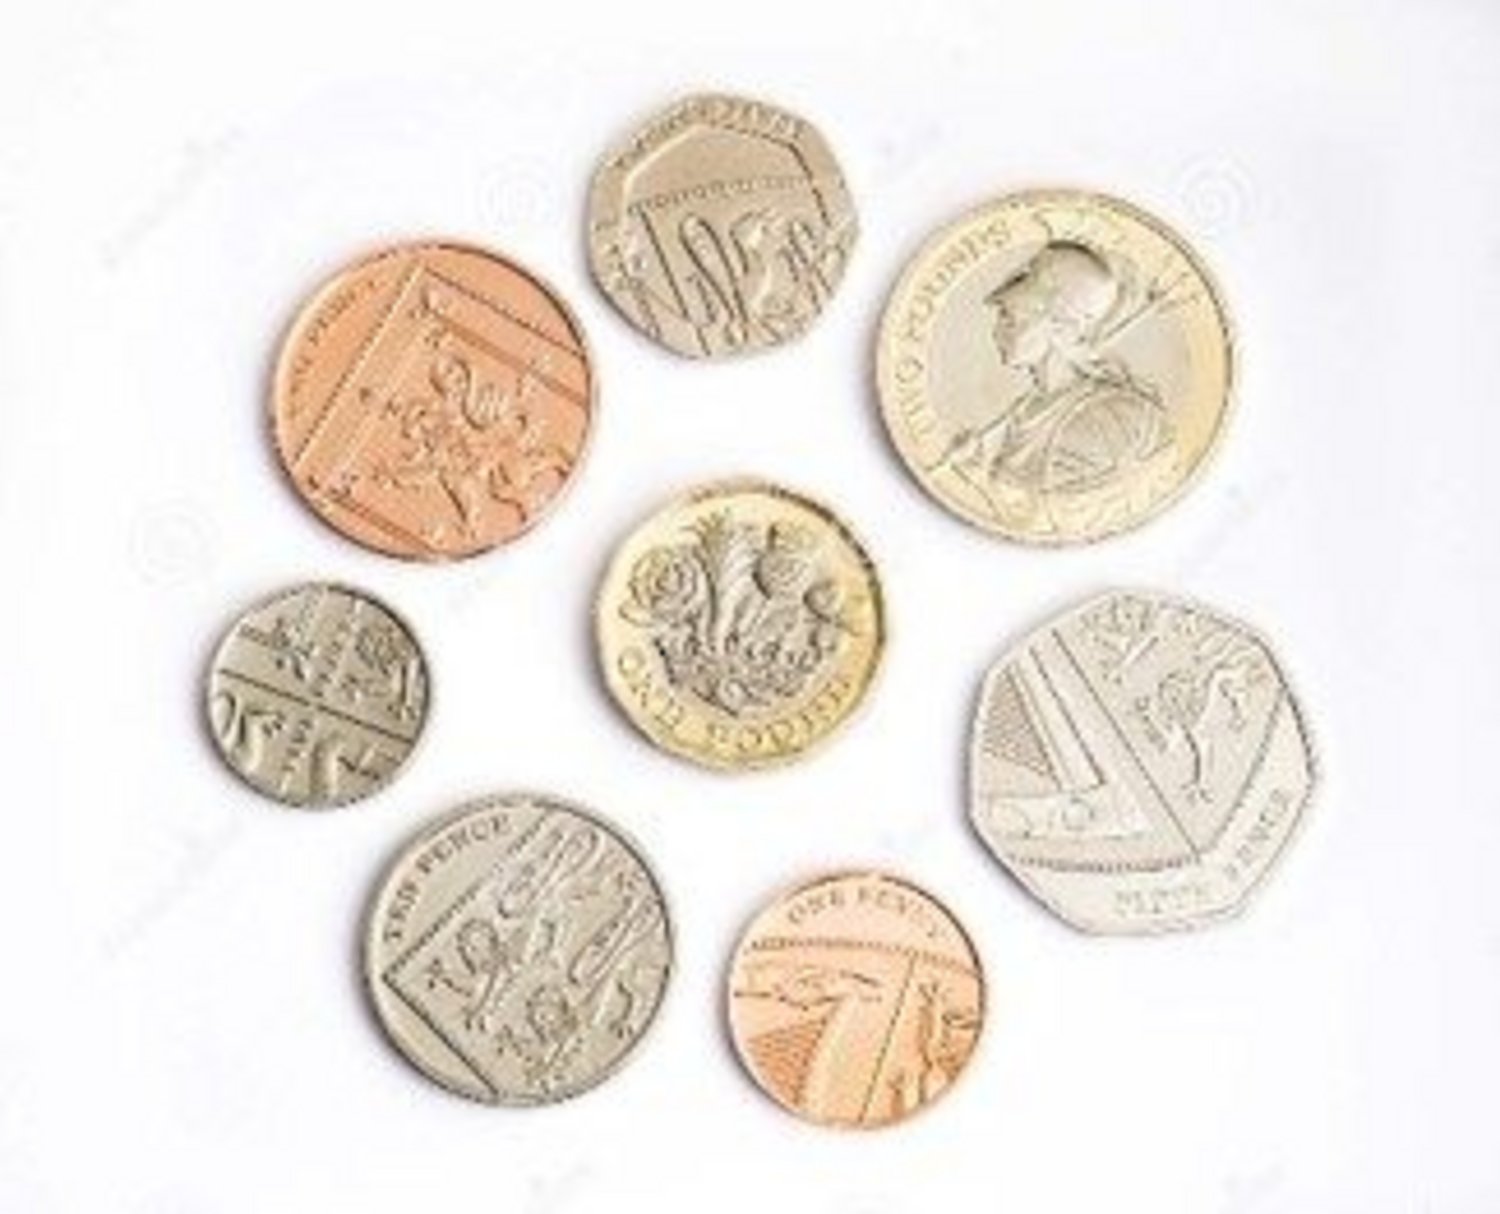 FitFans coins